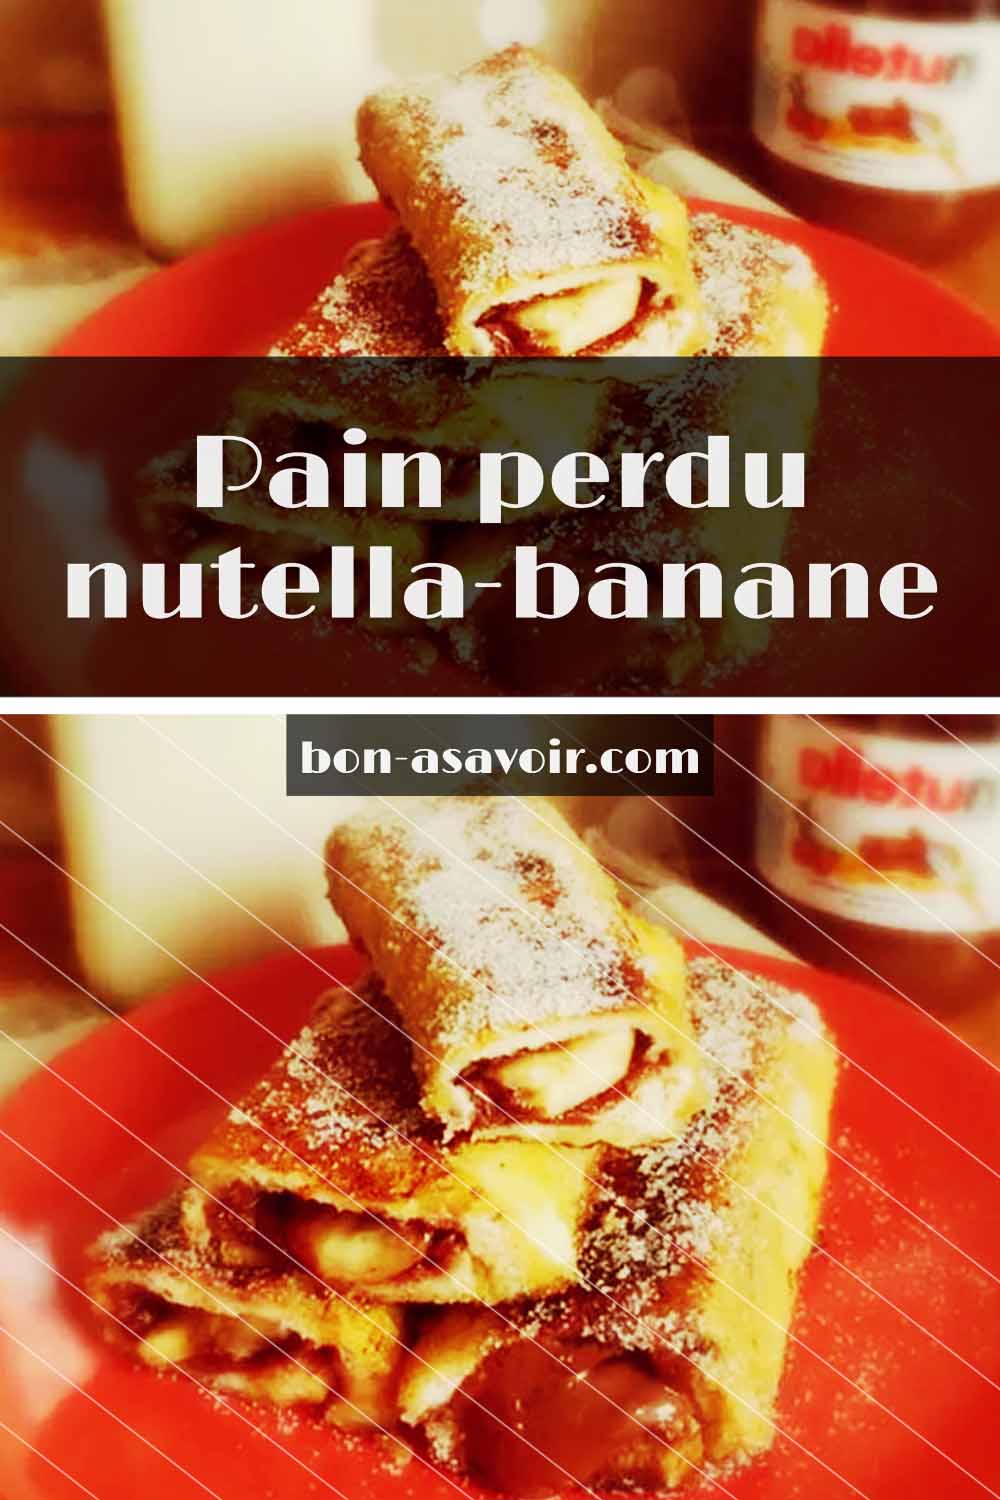 Pain perdu nutella-banane